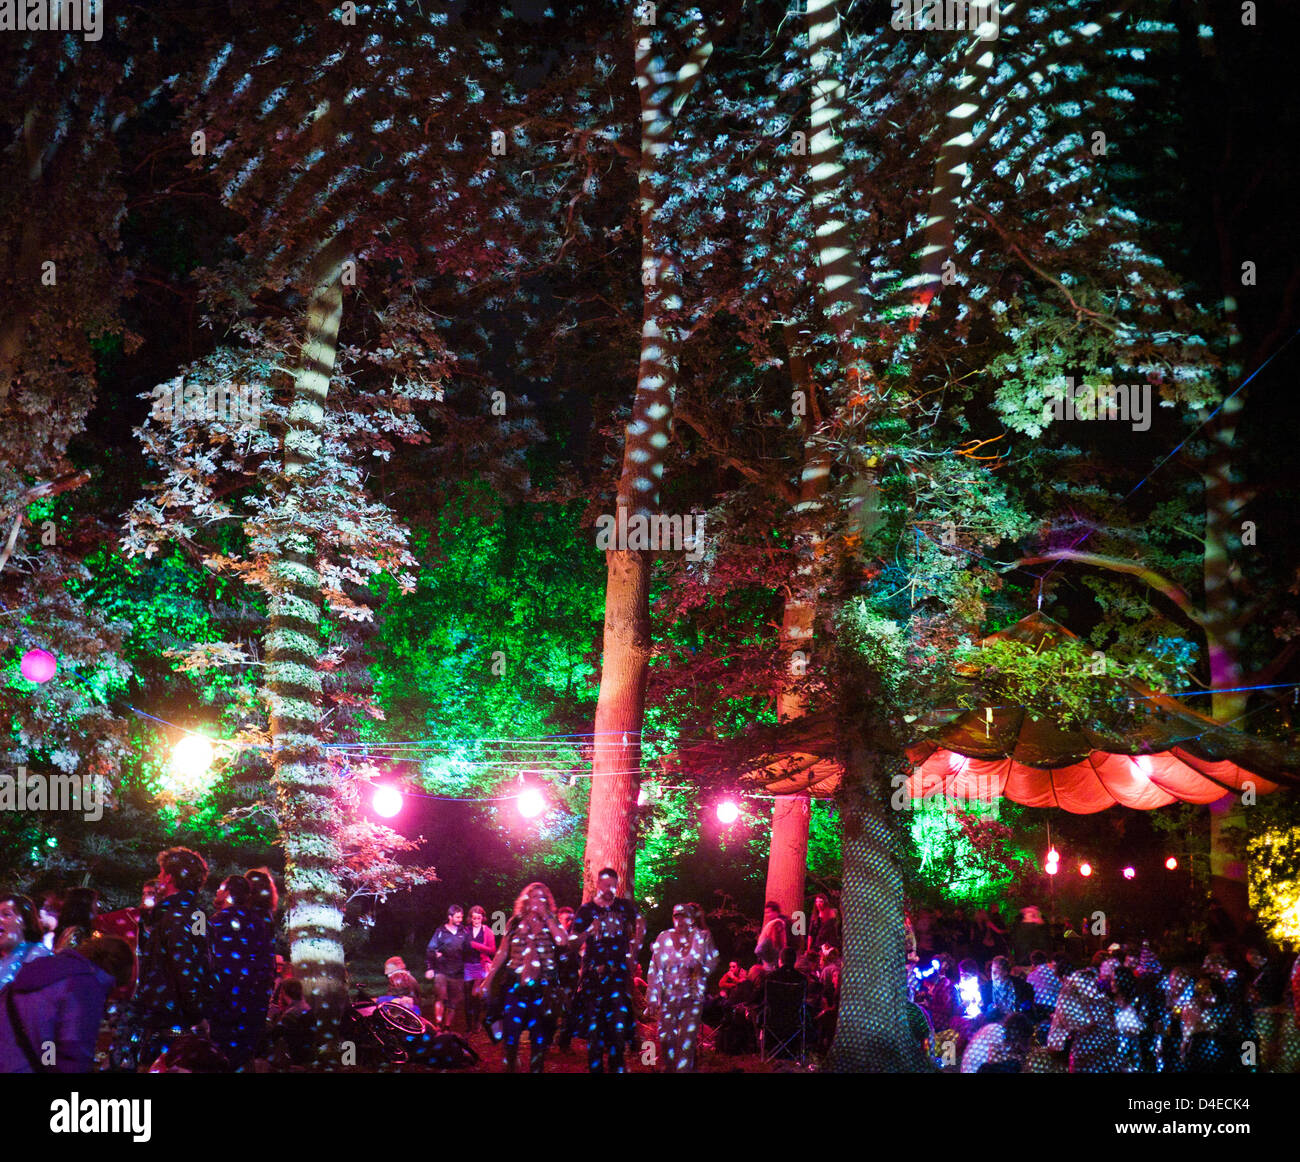 The enchanted forest at Shambala festival Stock Photo